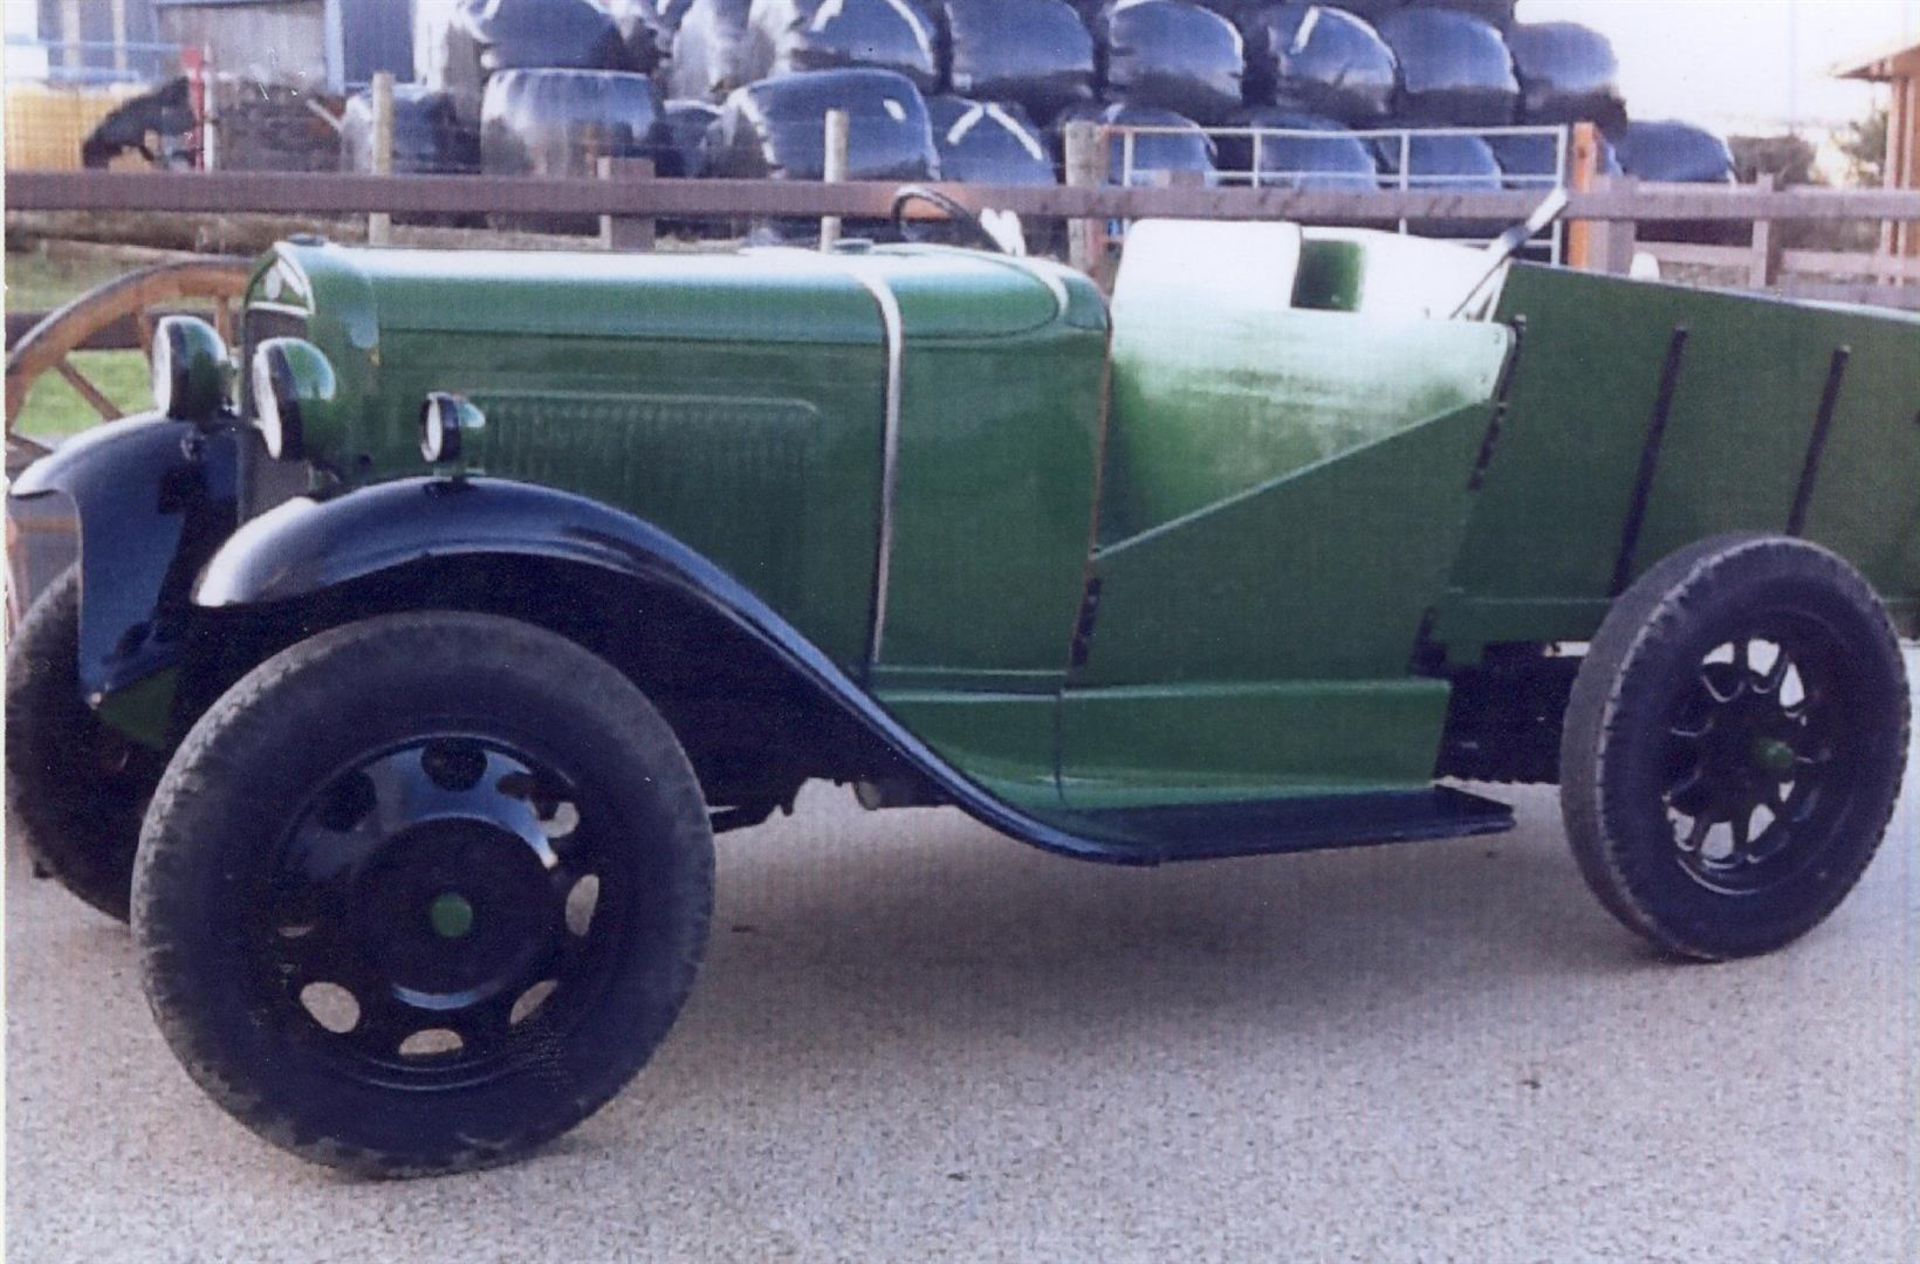 1932 Pattison Super Beta Golf Course Tractor Reg. No. 906 YUV Chassis No. 033099 Engine No. R21361